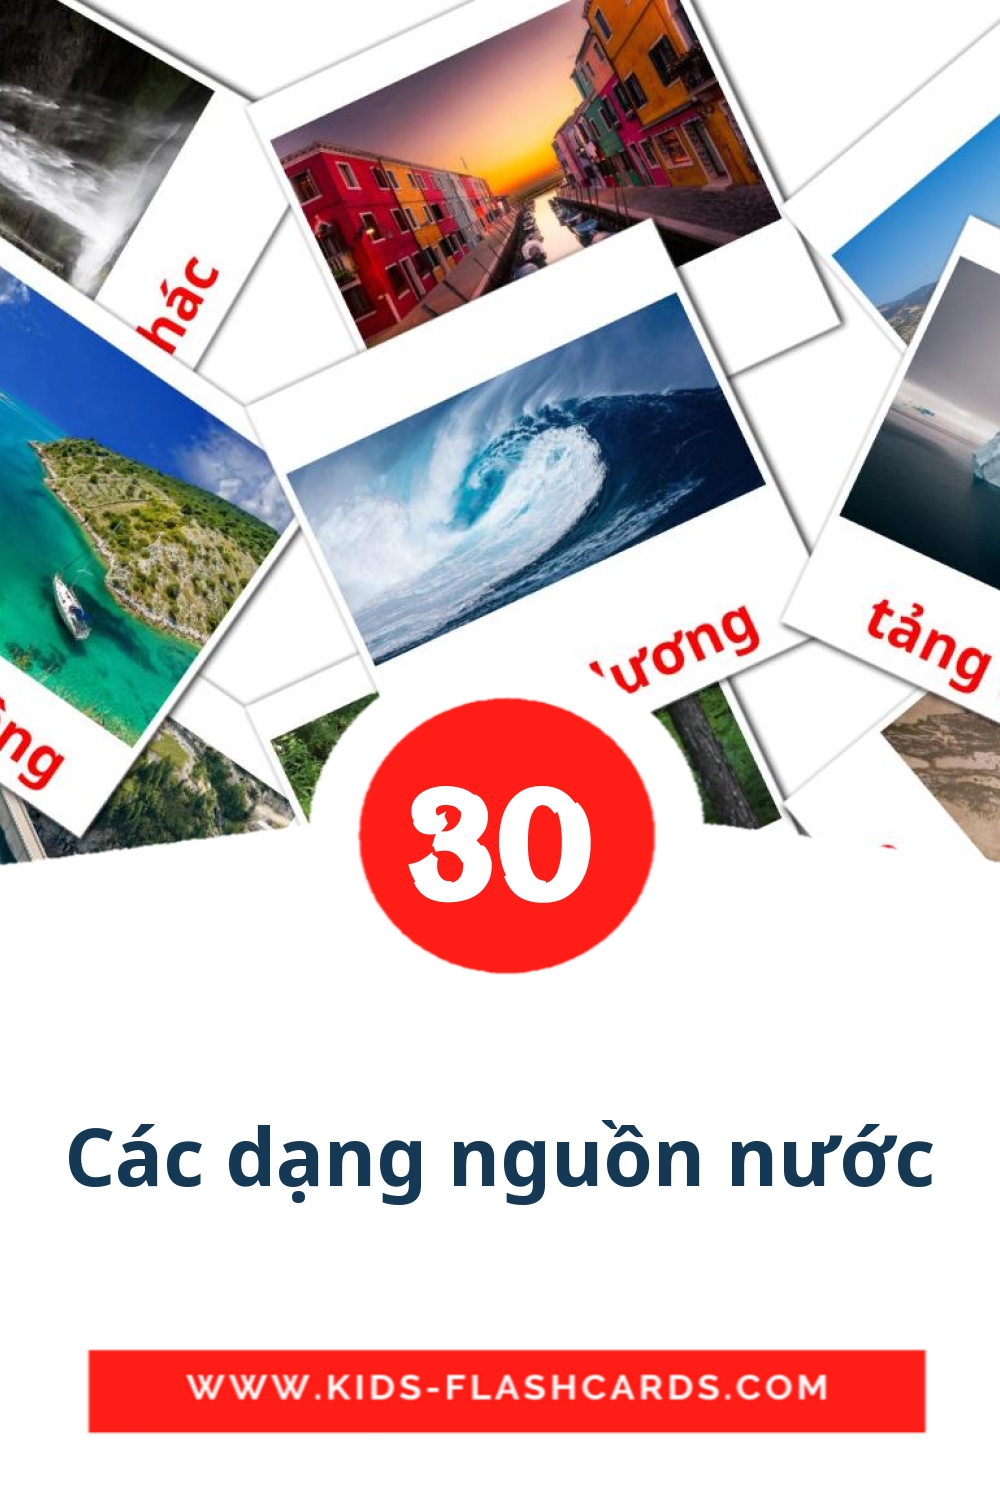 30 carte illustrate di Các dạng nguồn nước per la scuola materna in vietnamita